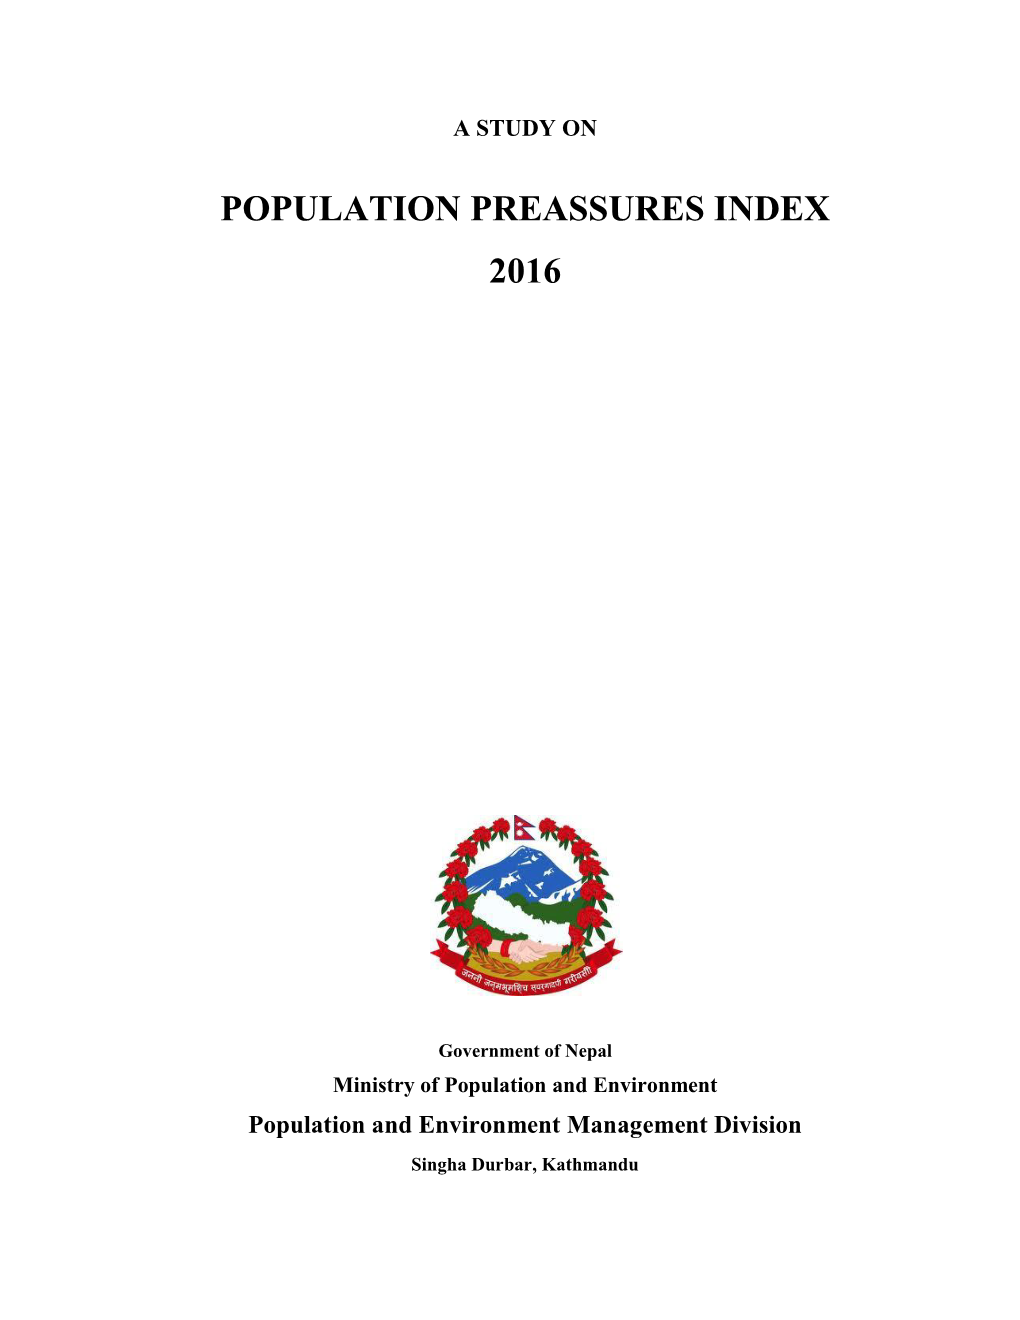 Population Preassures Index 2016